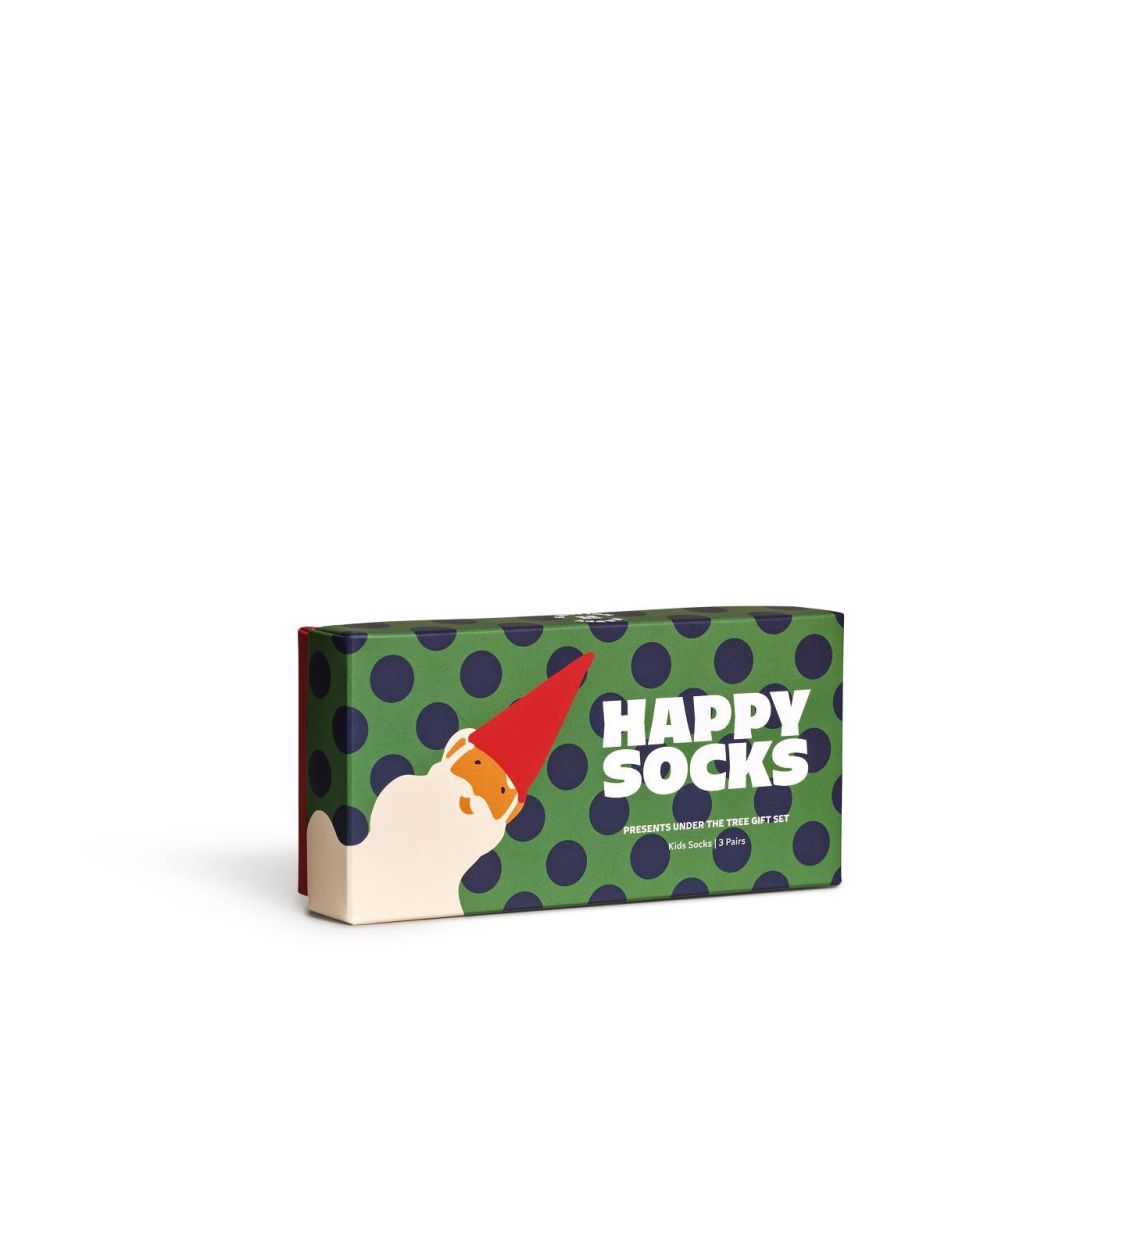 Happy Socks Kids 3-Pack Presents Under The Tree Gift Set (P000340) - WeekendMode